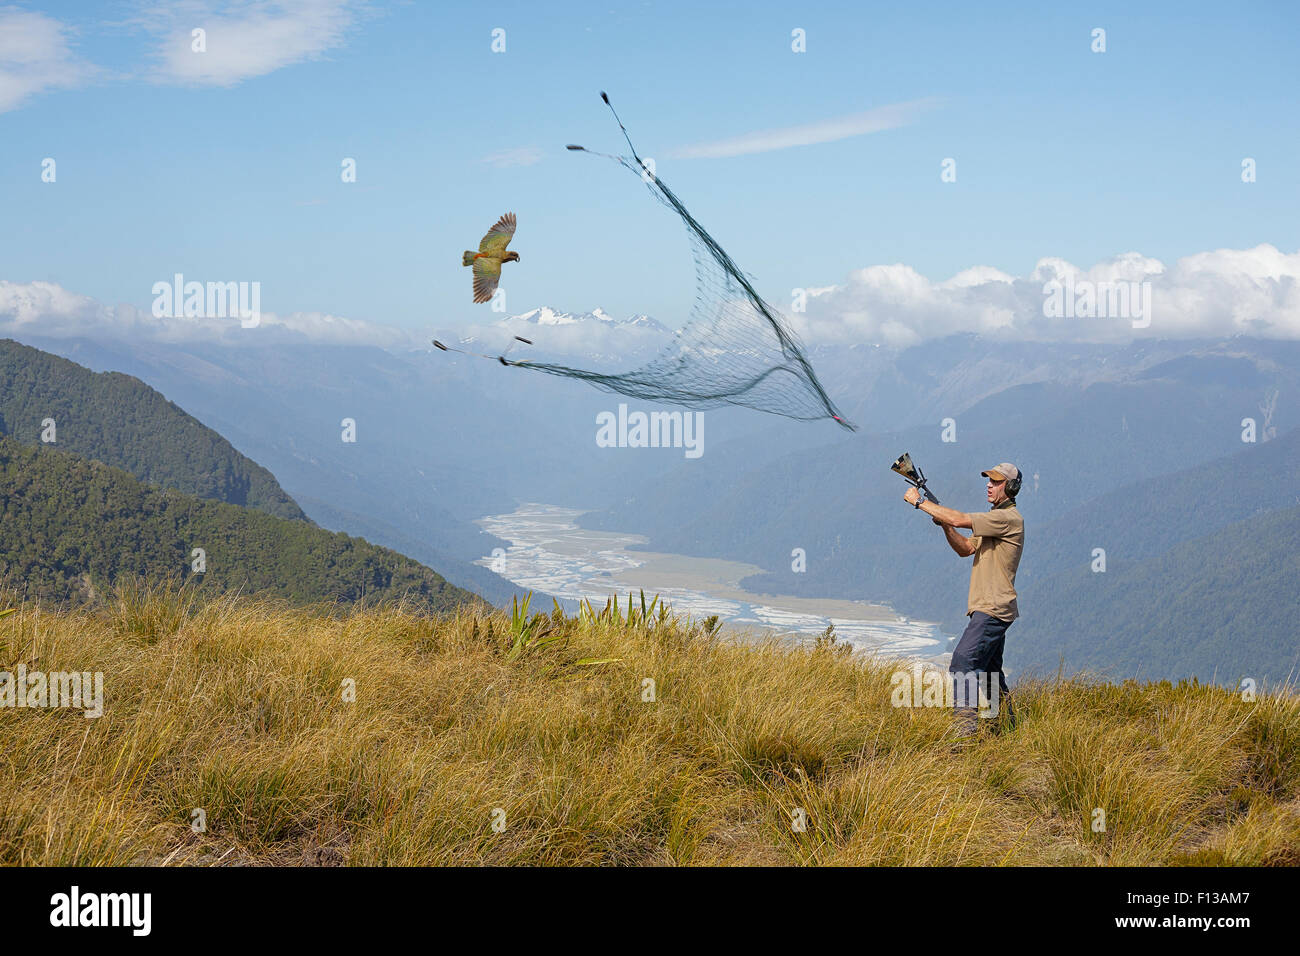 Forscher fangen einen fliegenden Kea (Nestor Notabilis) mit net Gewehr. Kea Forschung, Südinsel, Neuseeland. Januar. -Modell veröffentlicht. Digital Composite. Stockfoto